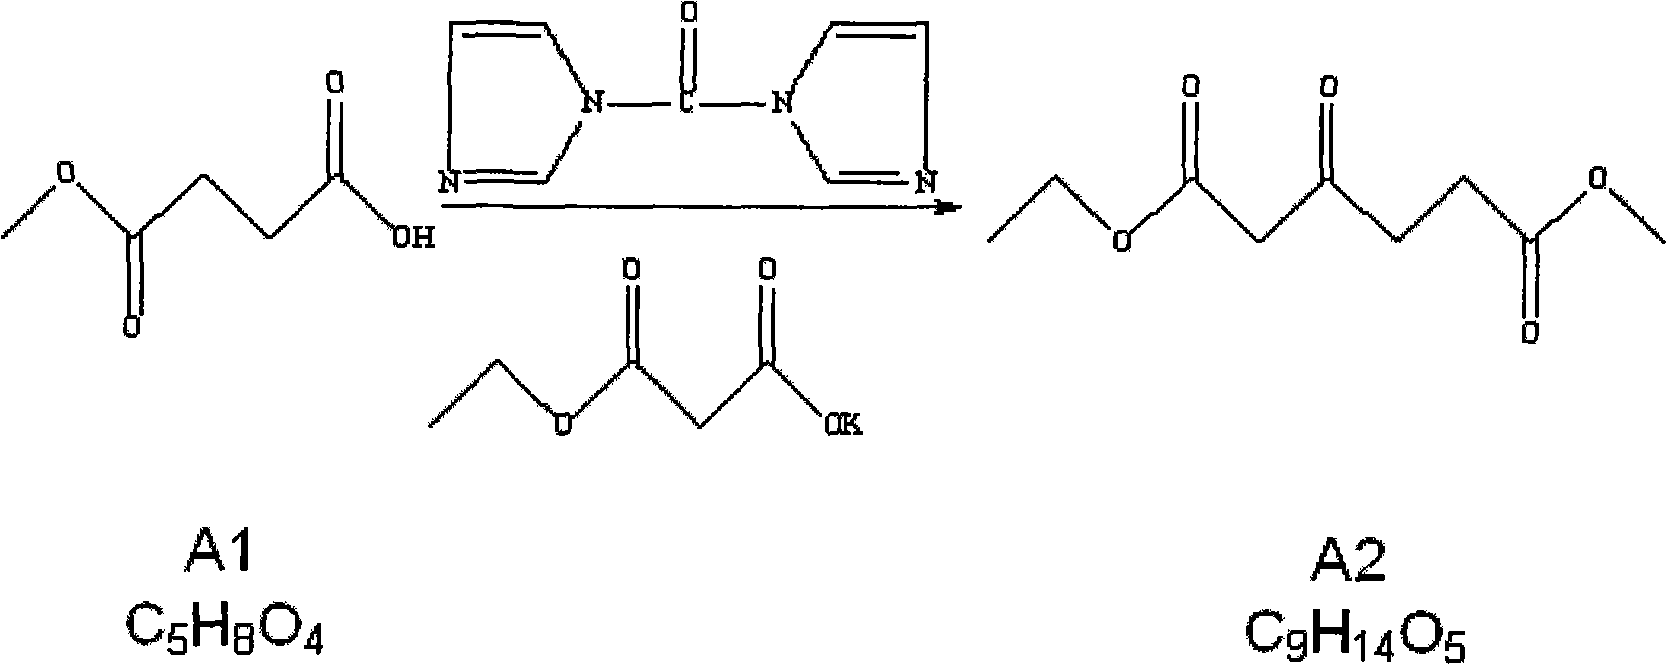 Method for preparing 5-aminolevulinic acid hydrochloride